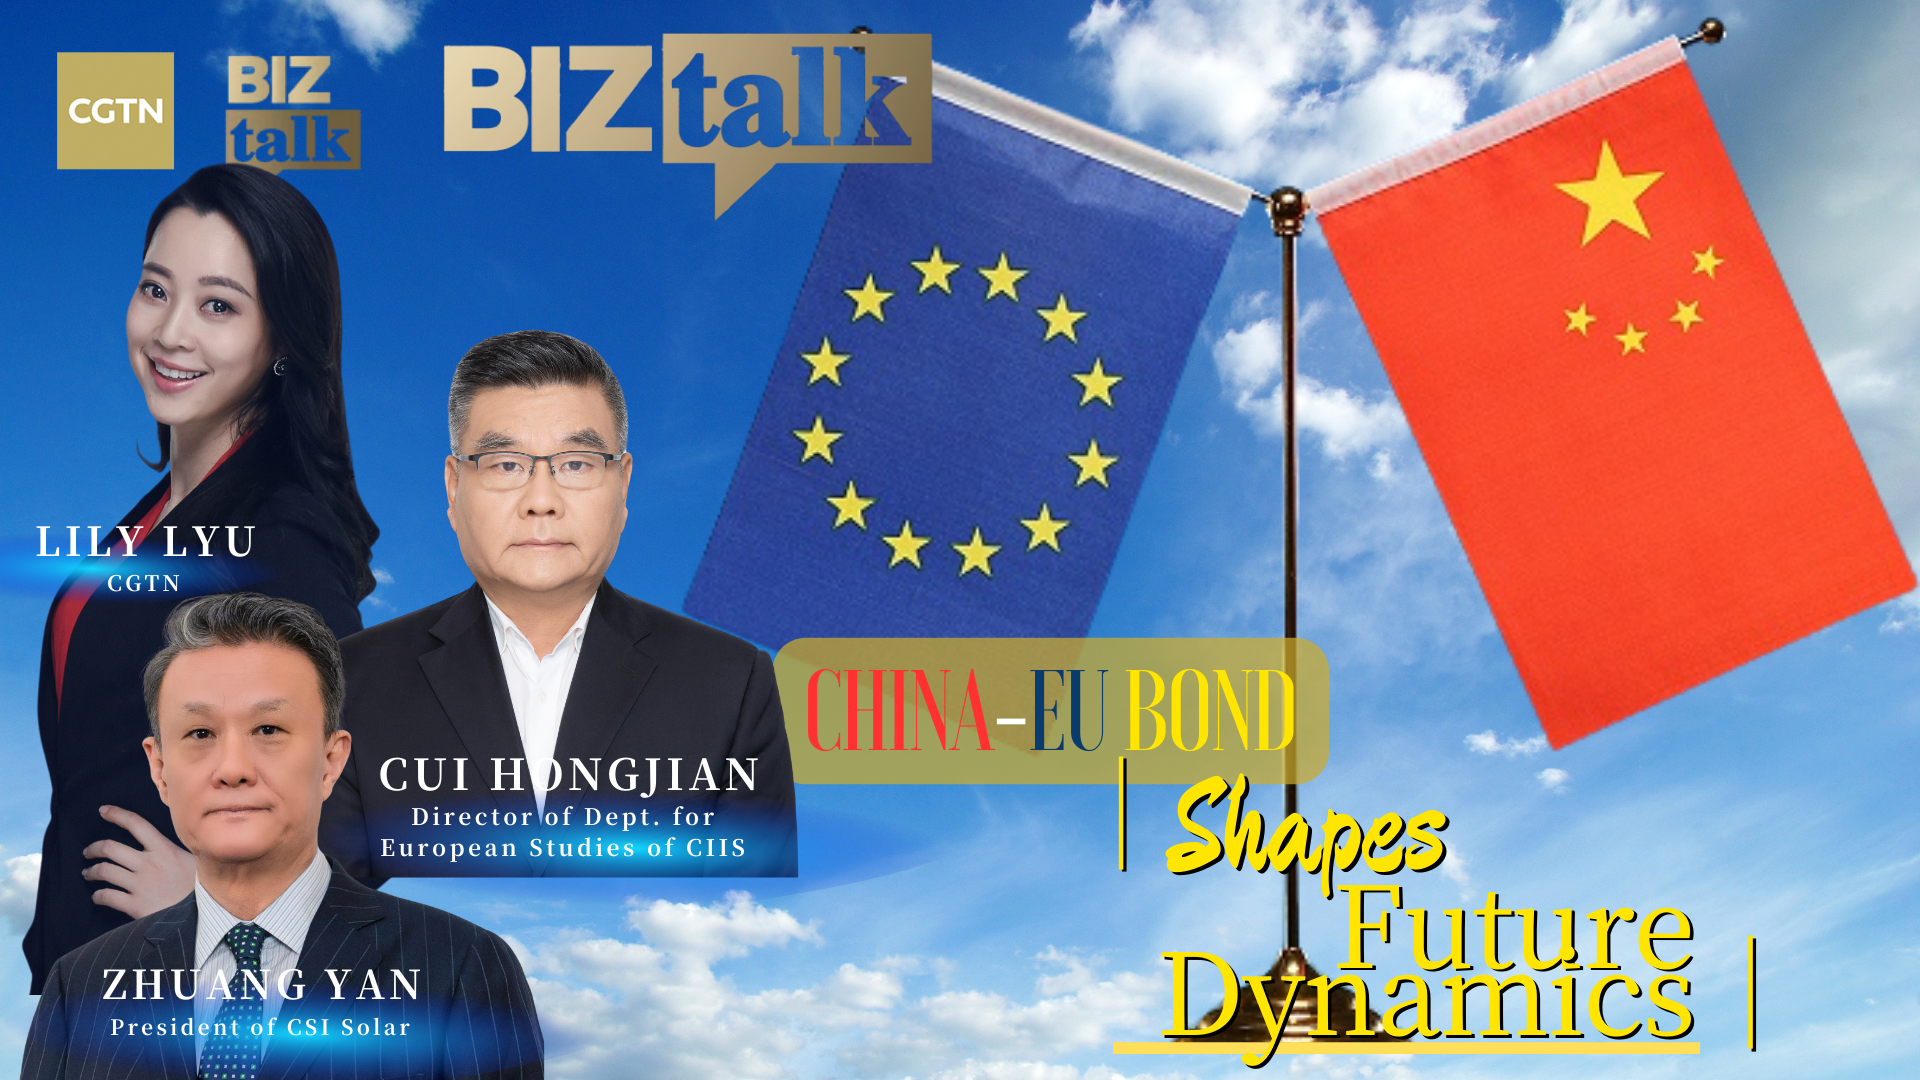 Watch: China-EU bond shapes future dynamics  